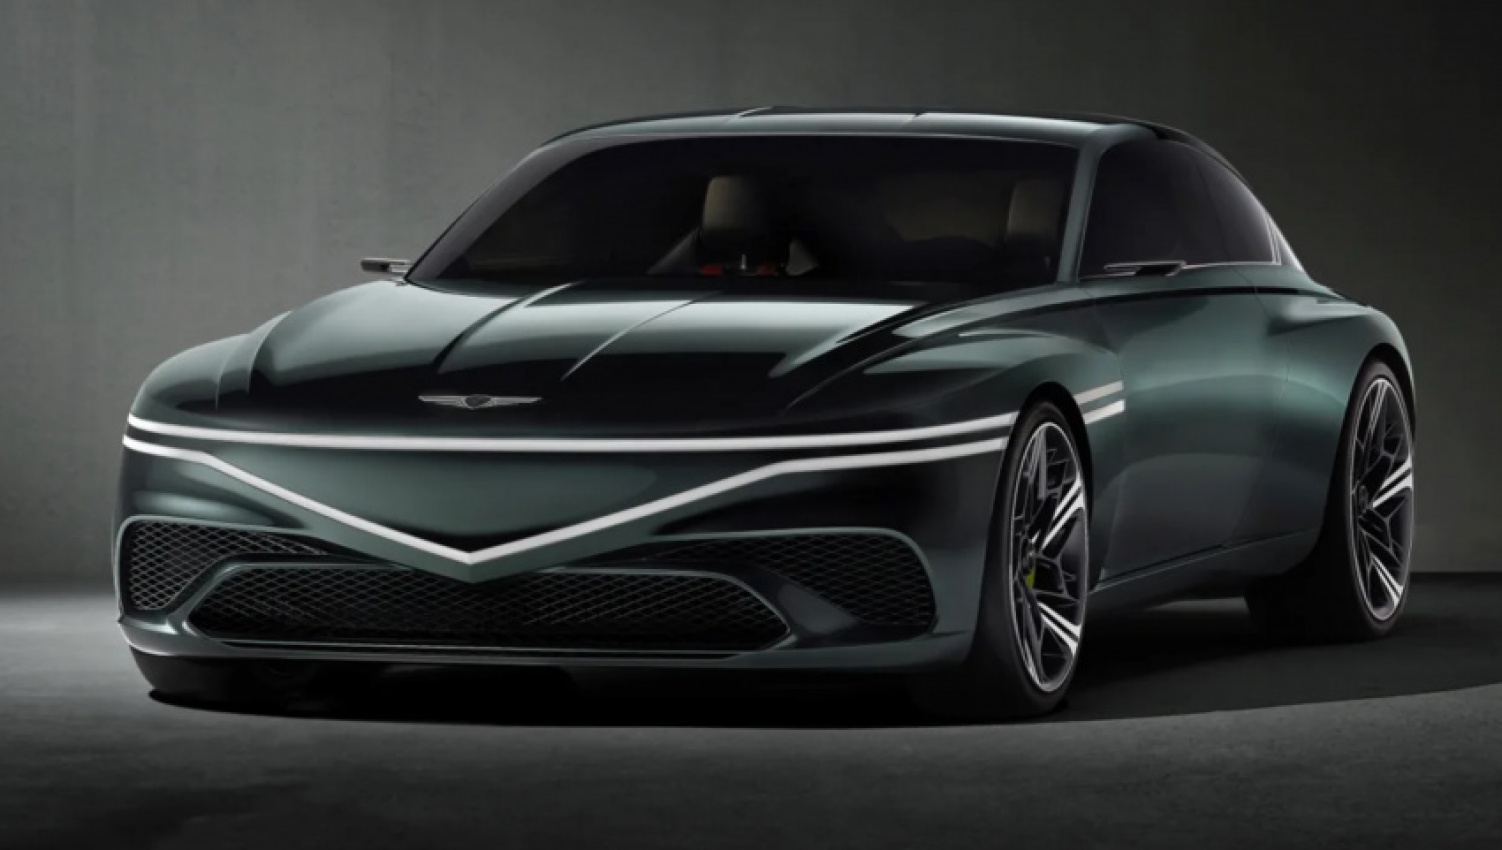 autos, car news, cars, genesis, news, concept cars, genesis x speedium coupe concept debuts